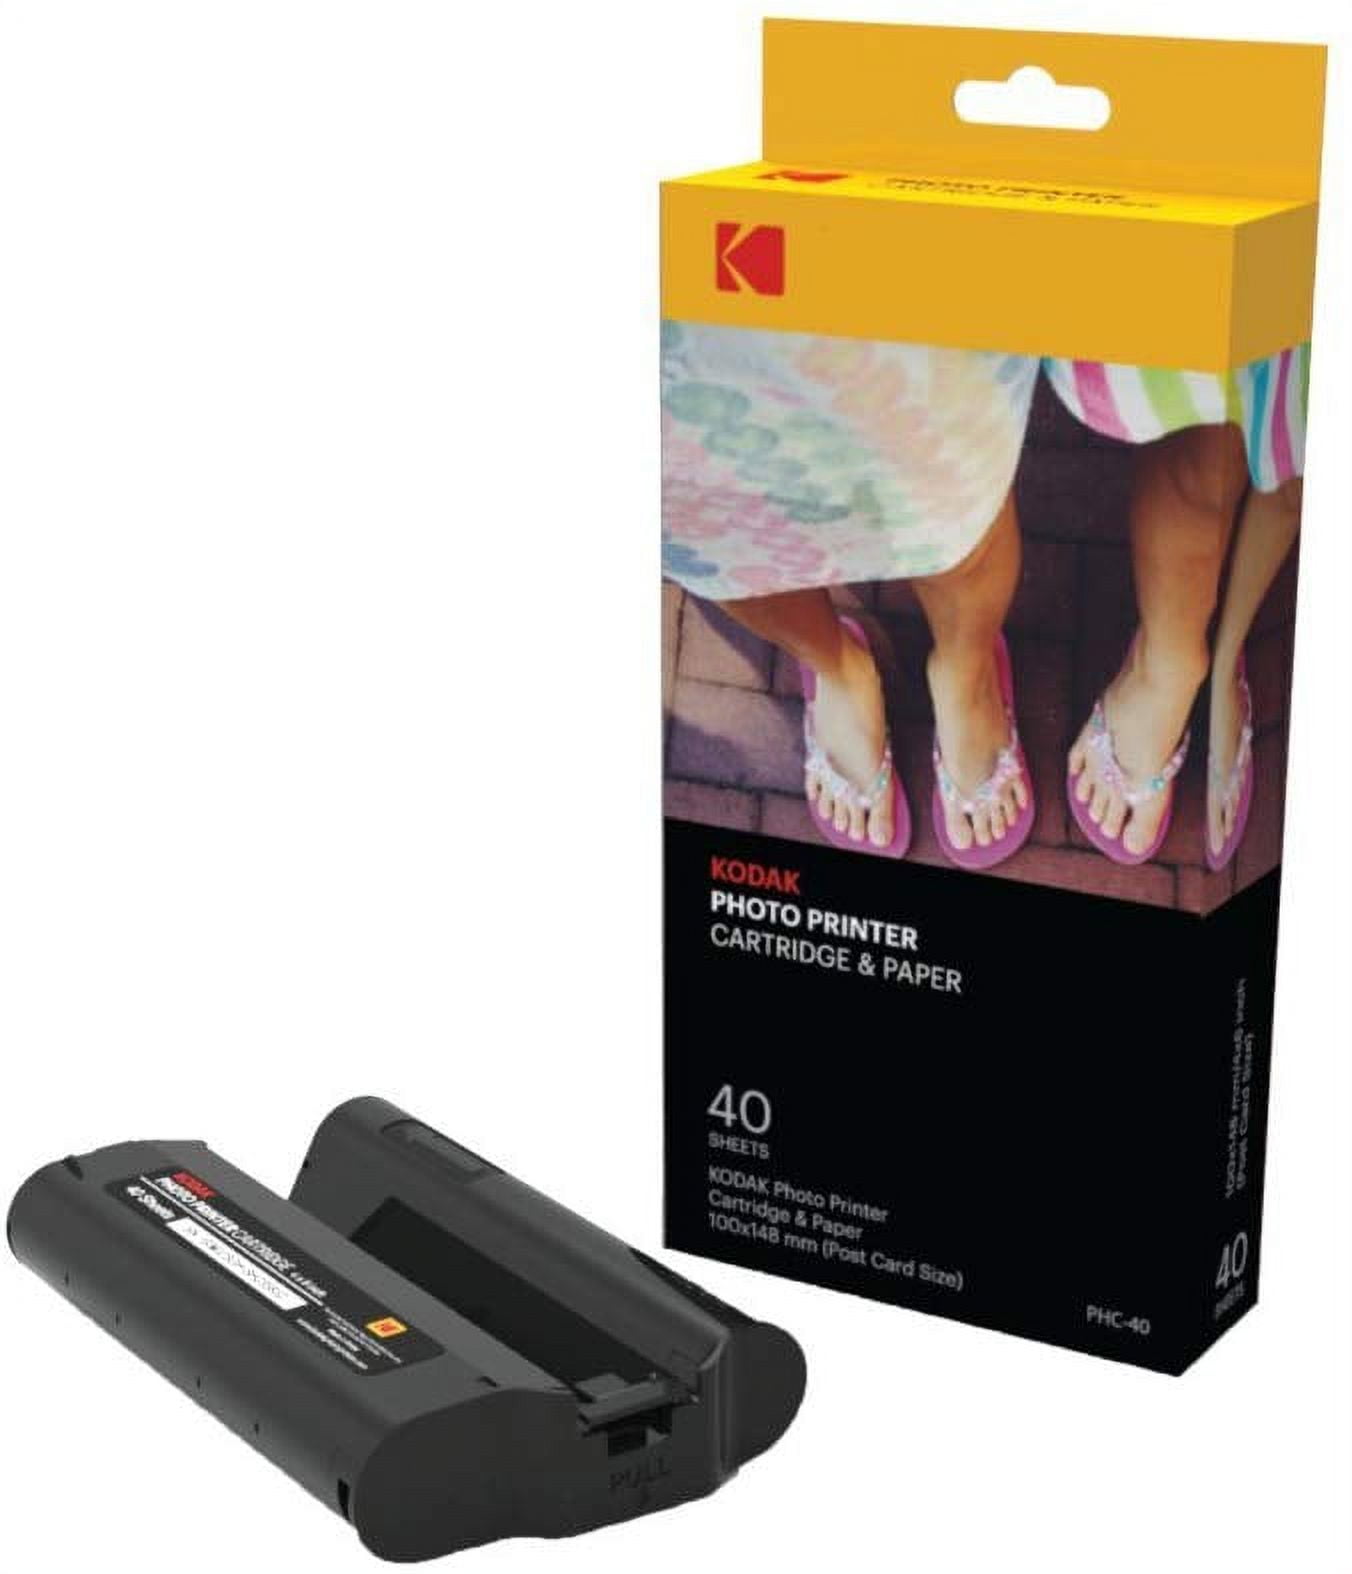 Kodak Dock & Wi-Fi Photo Printer Cartridge Refill & Photo Paper